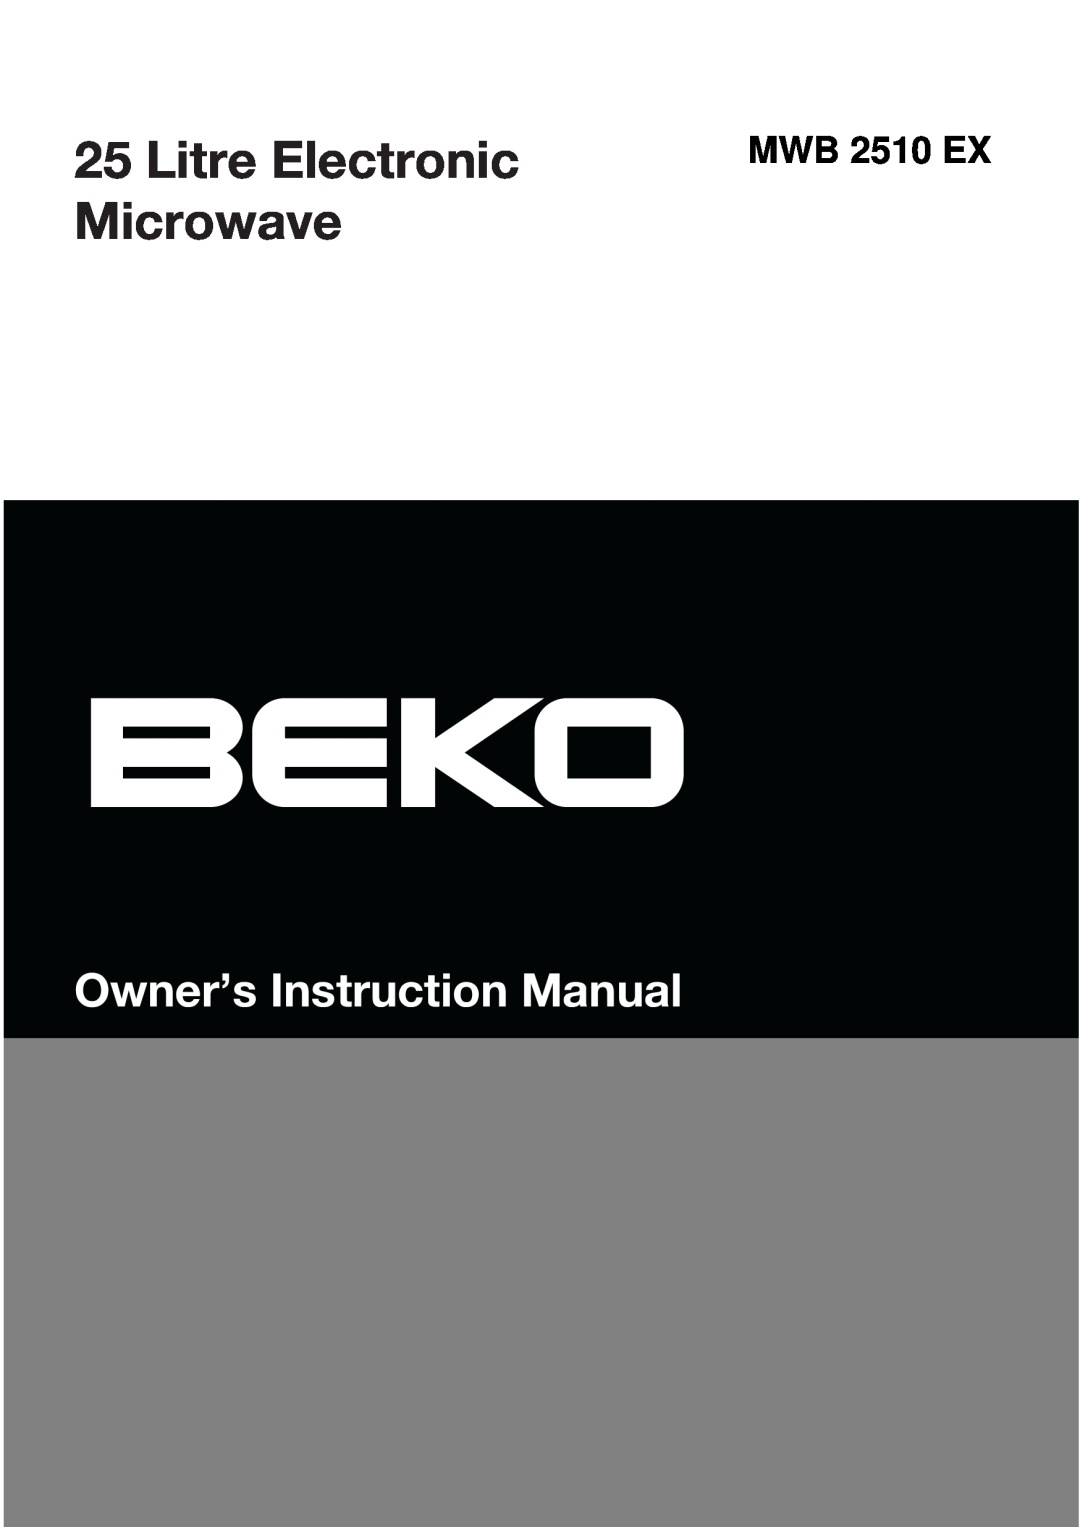 Beko MWB 2510 EX instruction manual Litre Electronic Microwave 